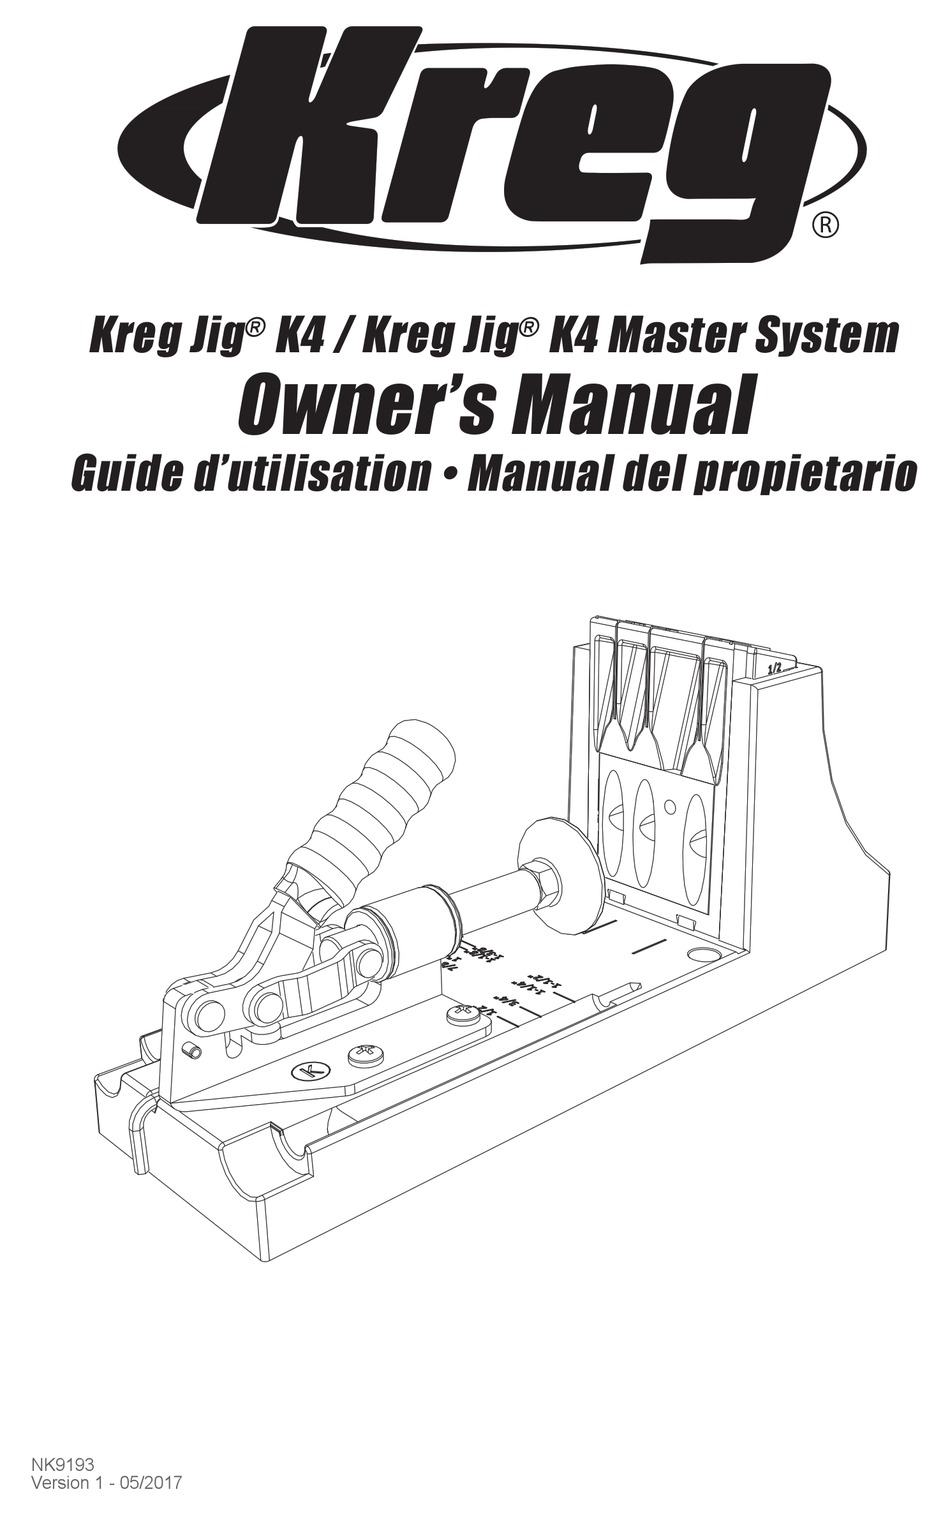 KREG JIG K4 OWNER'S MANUAL Pdf Download | ManualsLib